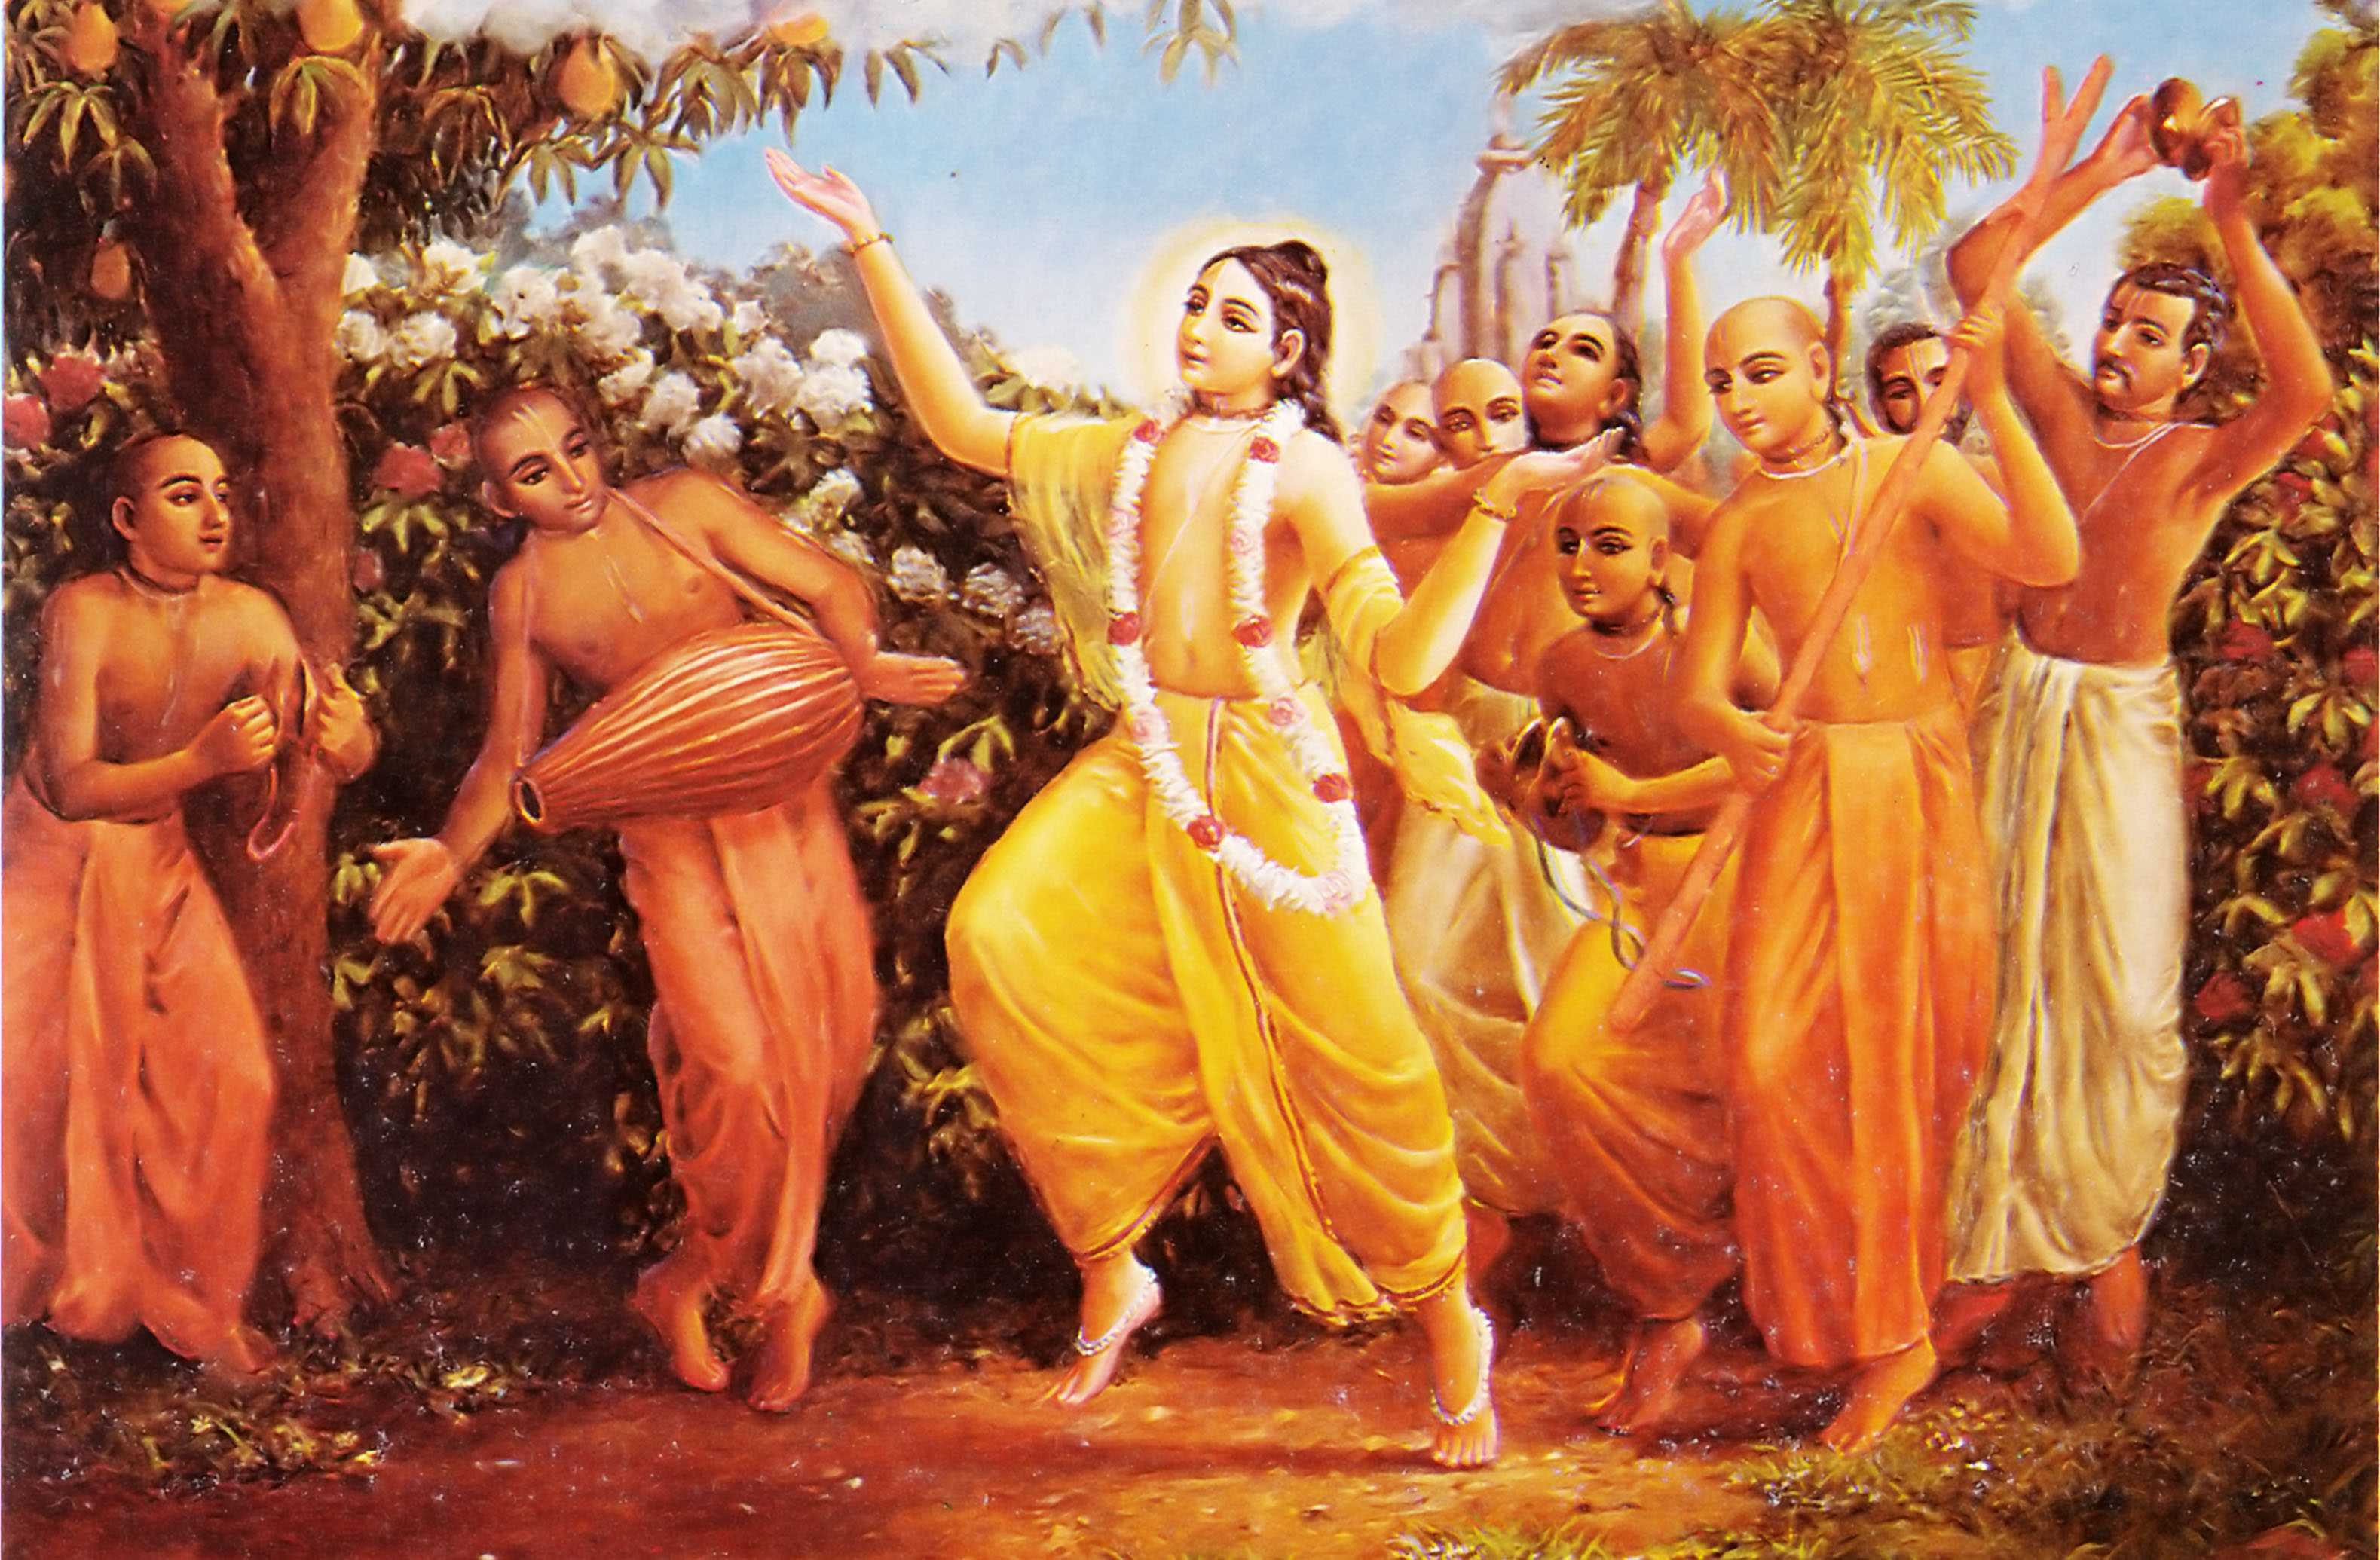 Chanting the Maha-Mantra  The Hare Krishna Movement